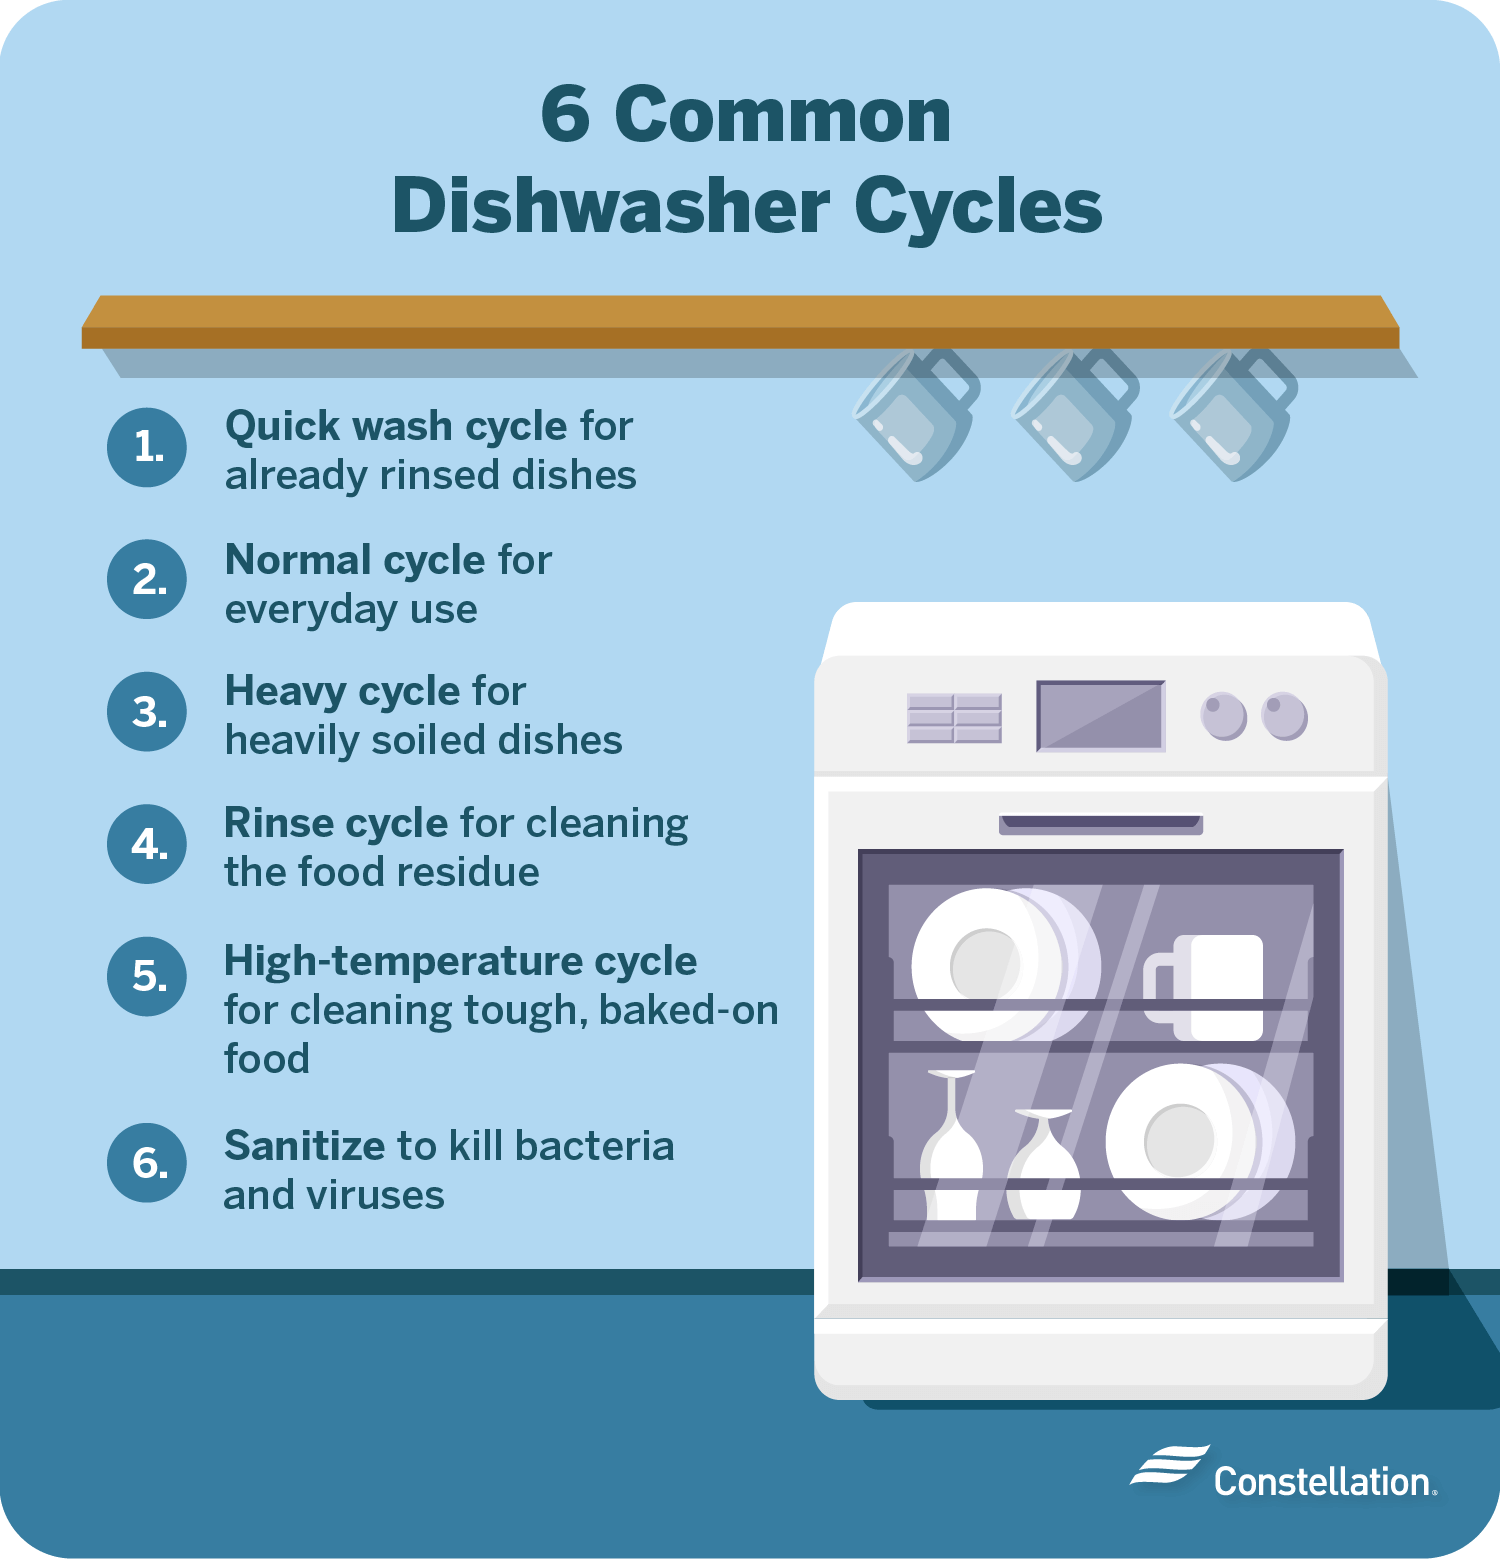 Most common dishwasher washing cycles.